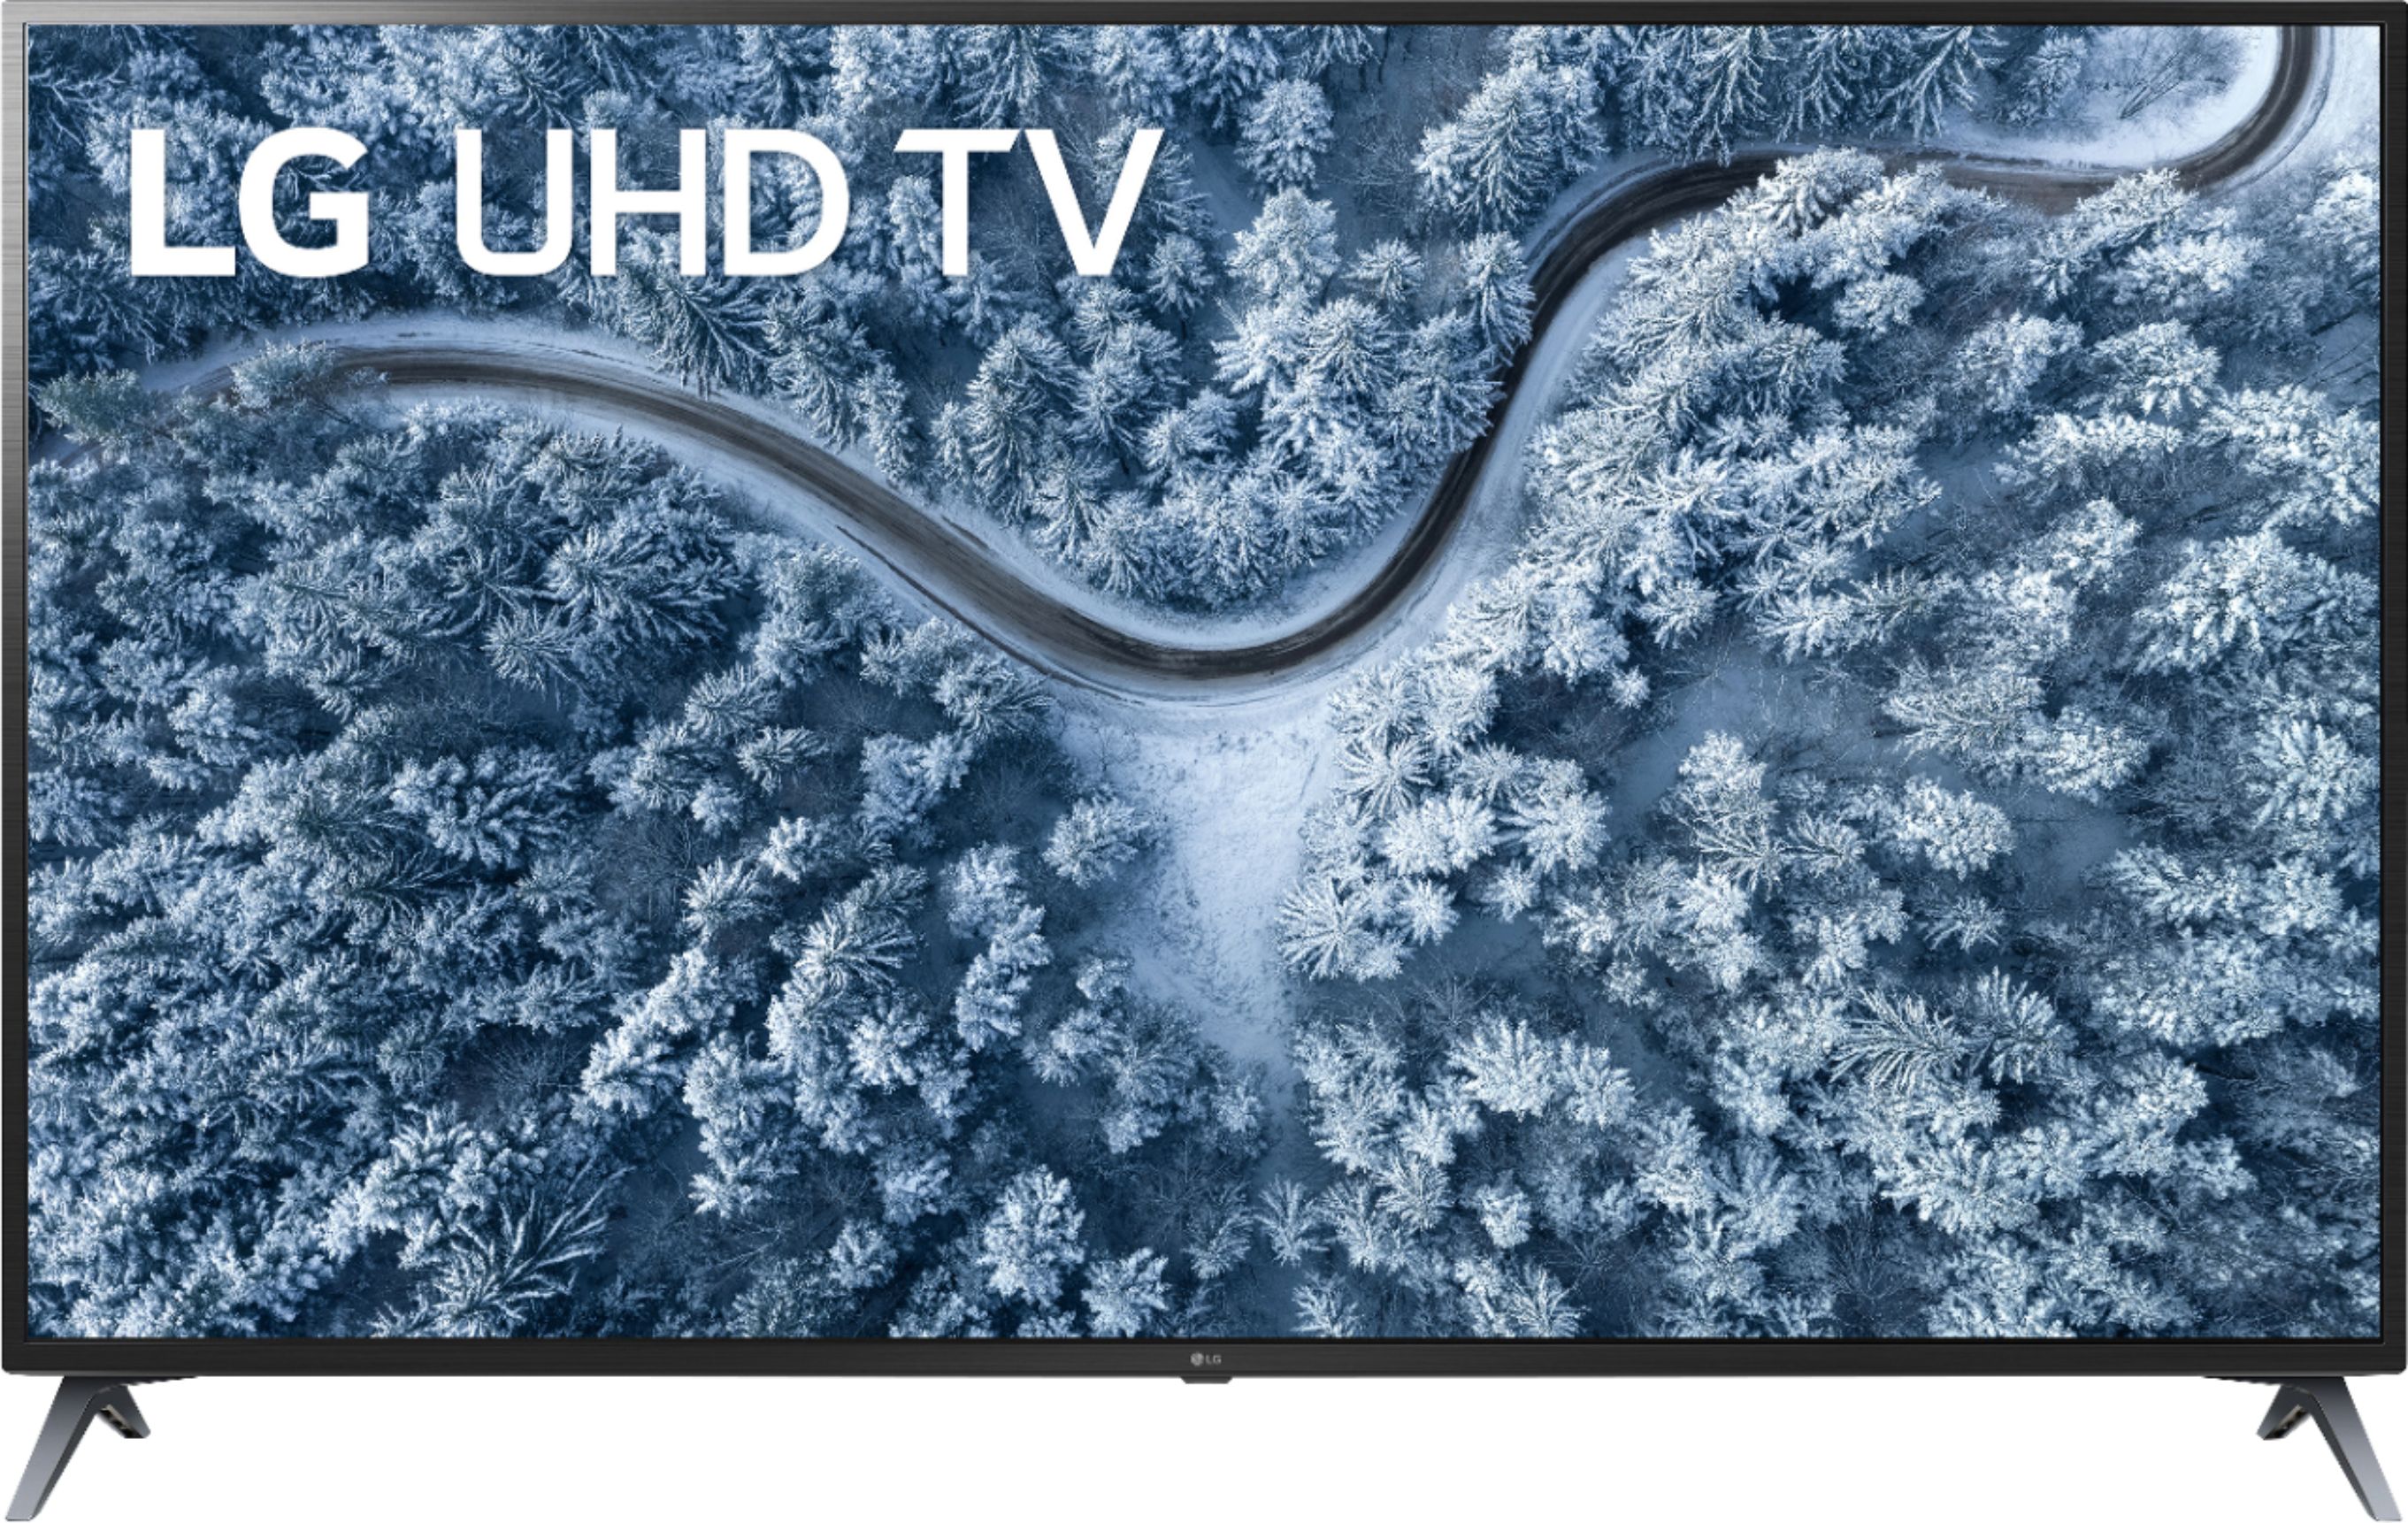 LG 70-inch UP7070 4K UHD LED TV deal